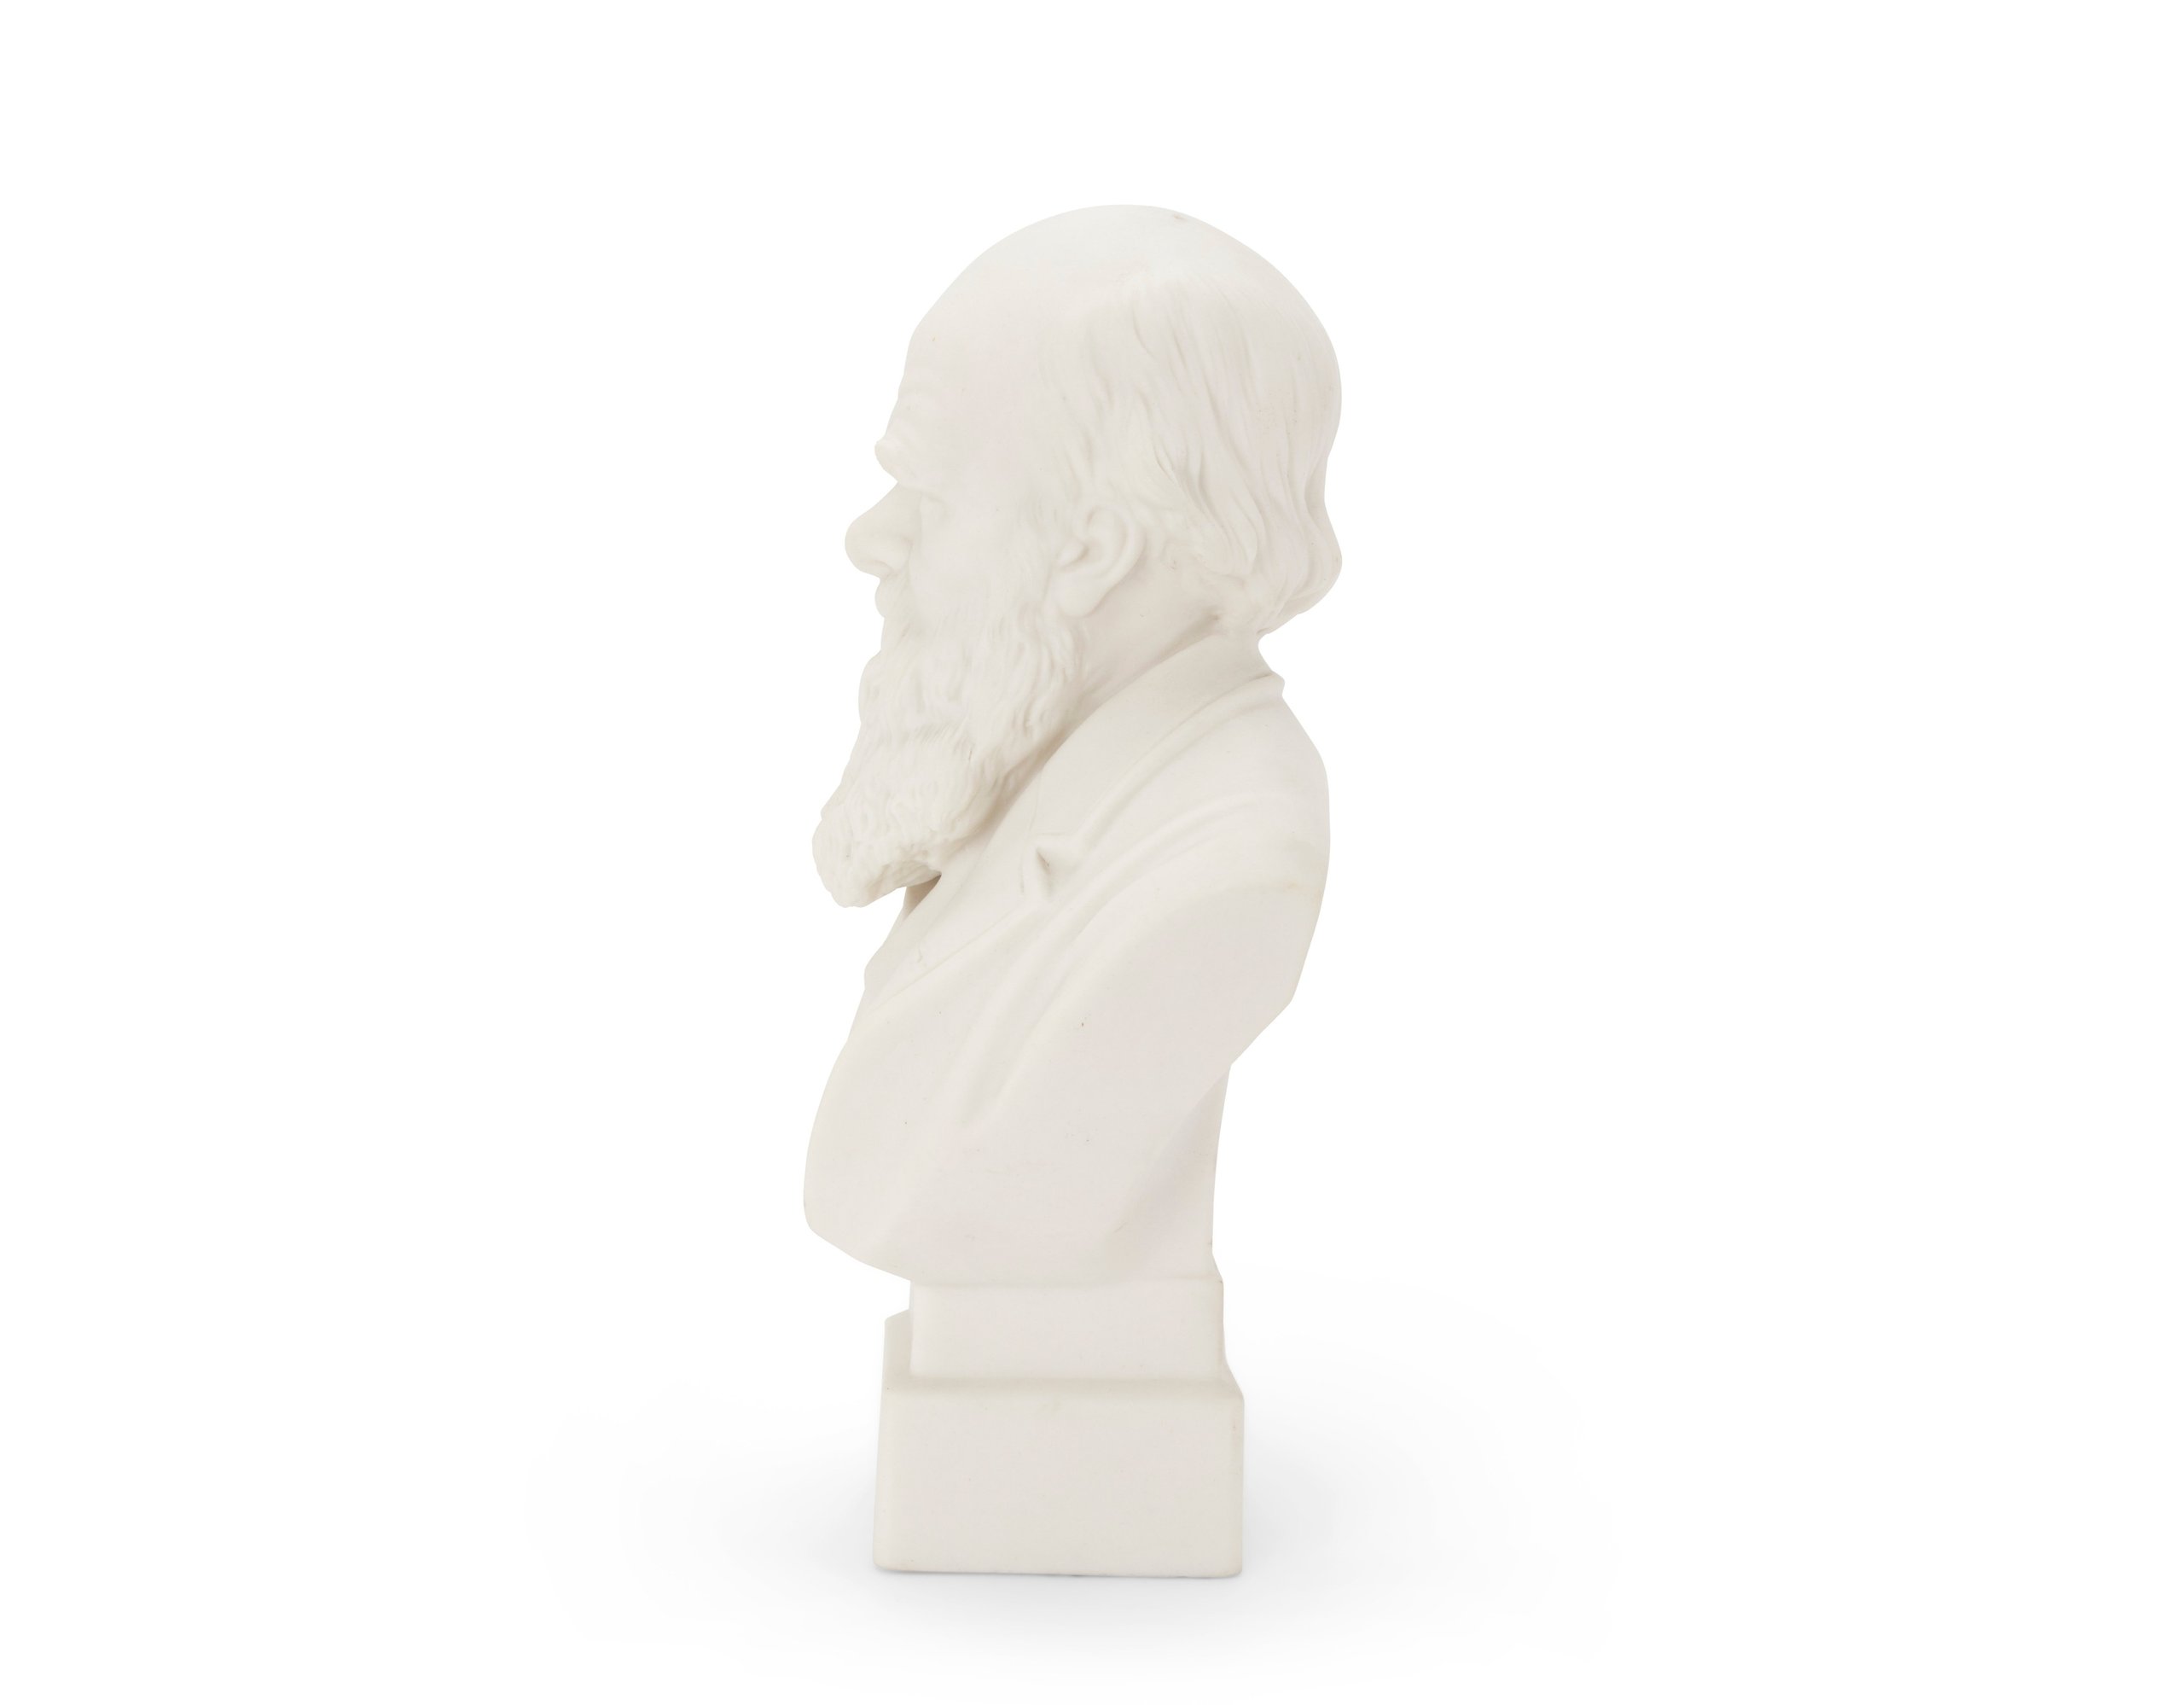 Porcelain bust of Charles Darwin